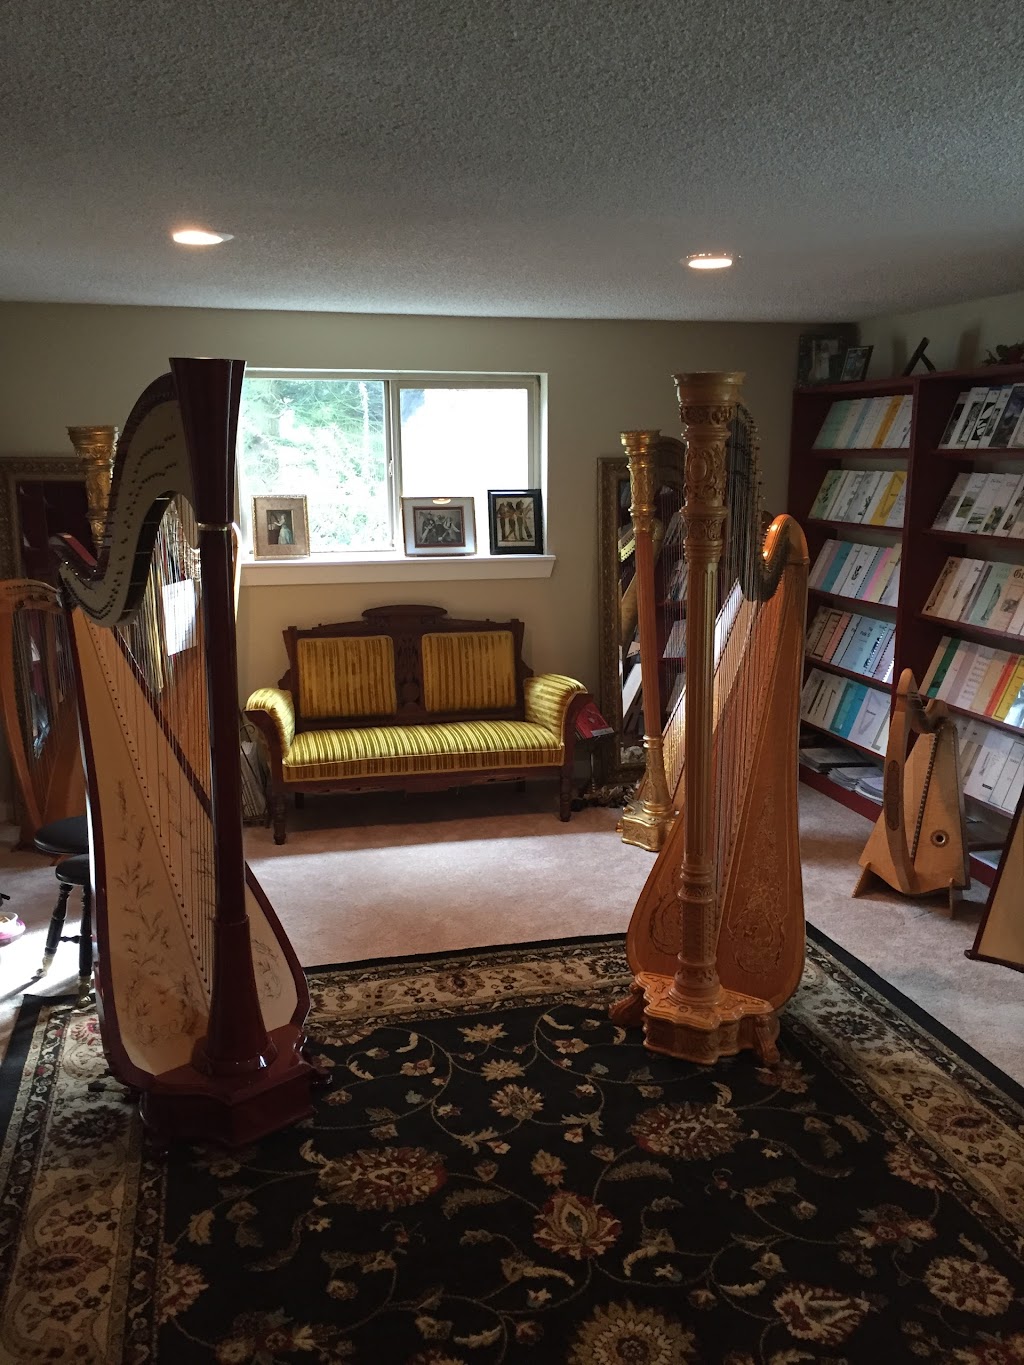 The Enchanted Harp | 11902 Reservoir Rd E, Puyallup, WA 98374, USA | Phone: (253) 770-0550